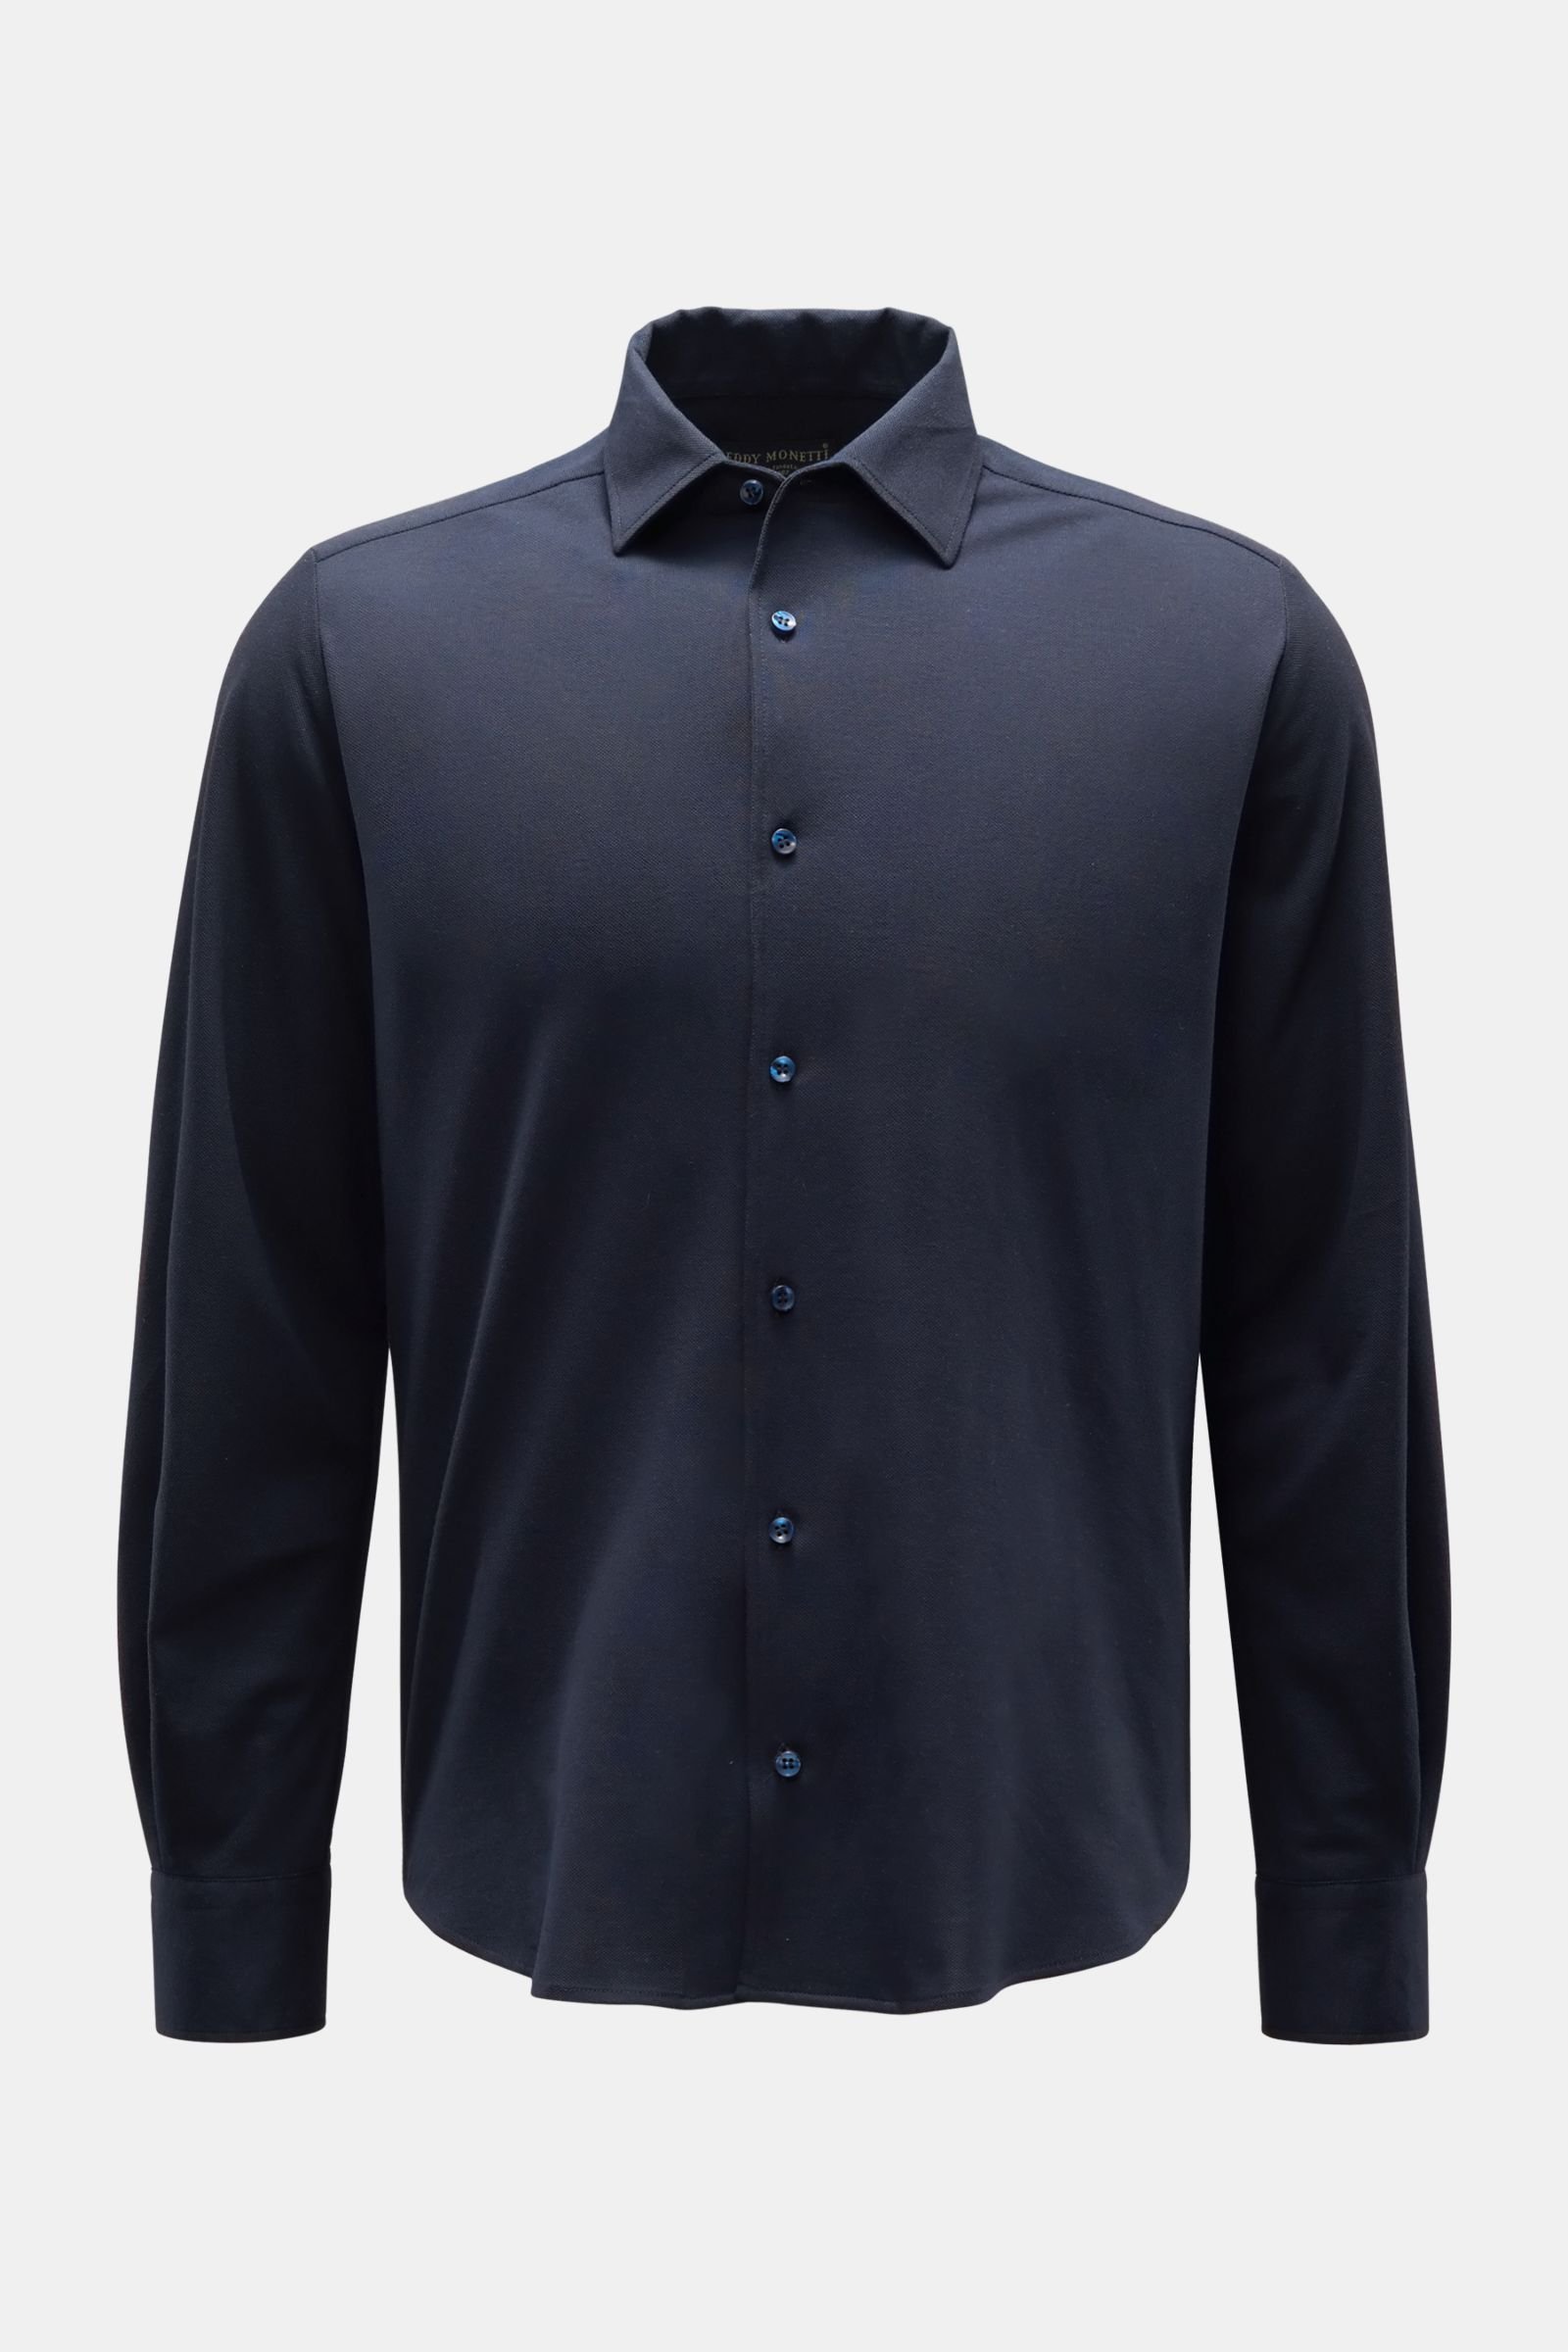 Oxford shirt narrow collar navy